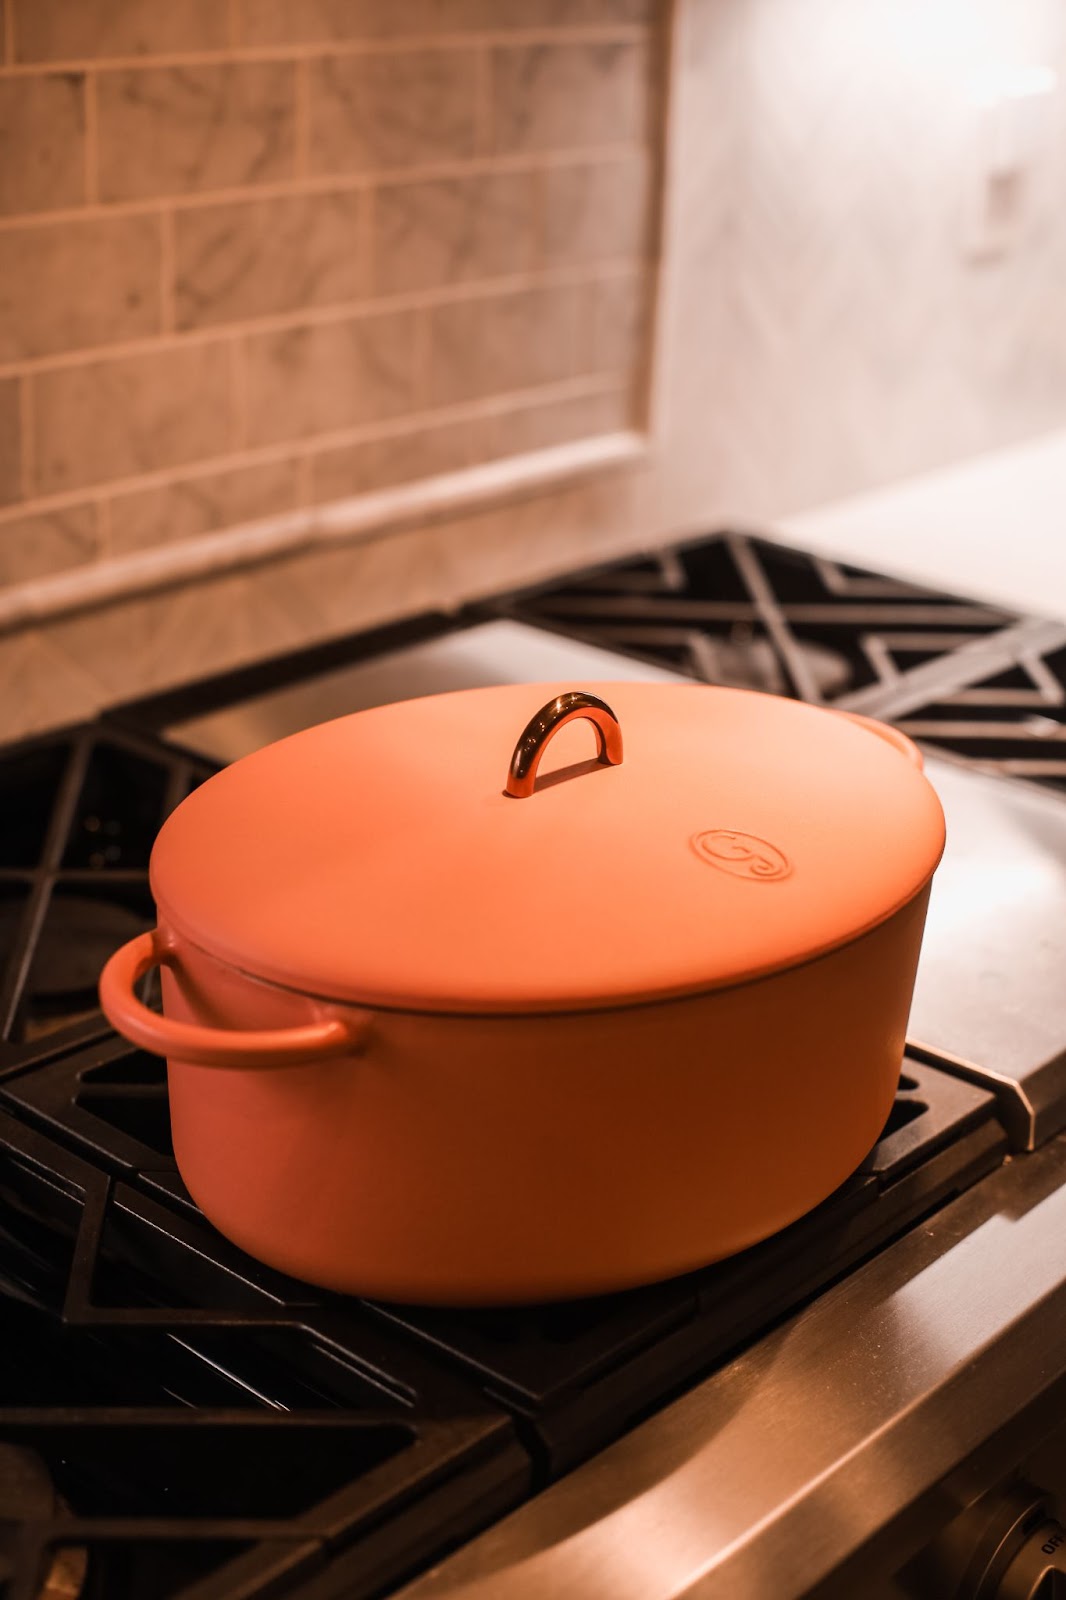 Family Style: 5 Piece Cookware Set - Essential Pots & Pans, Great Jones